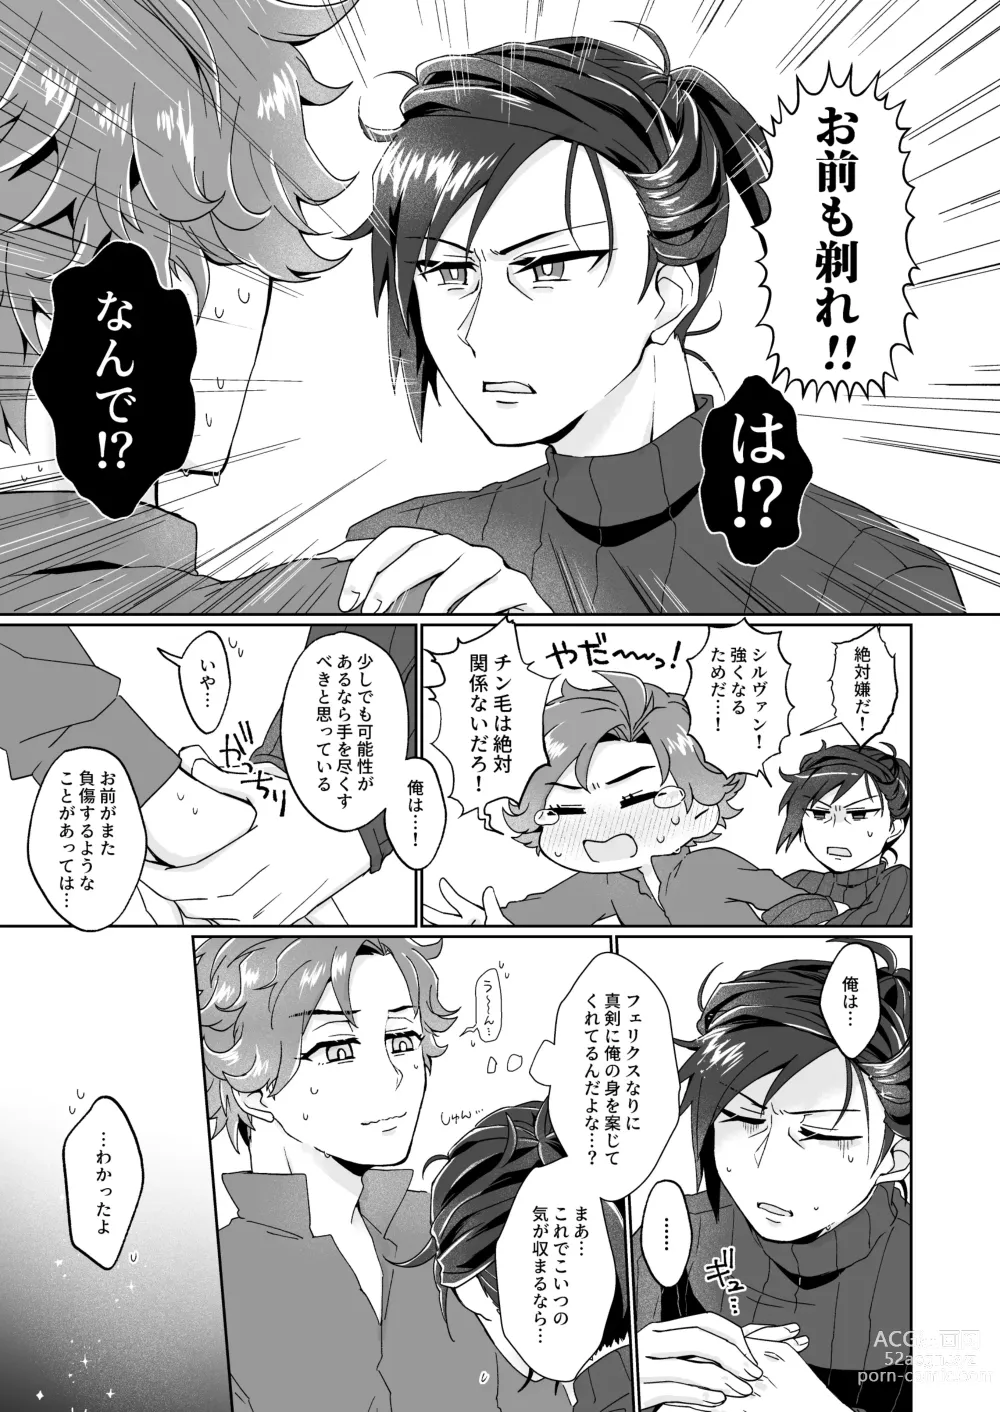 Page 9 of doujinshi Shaving Panic!